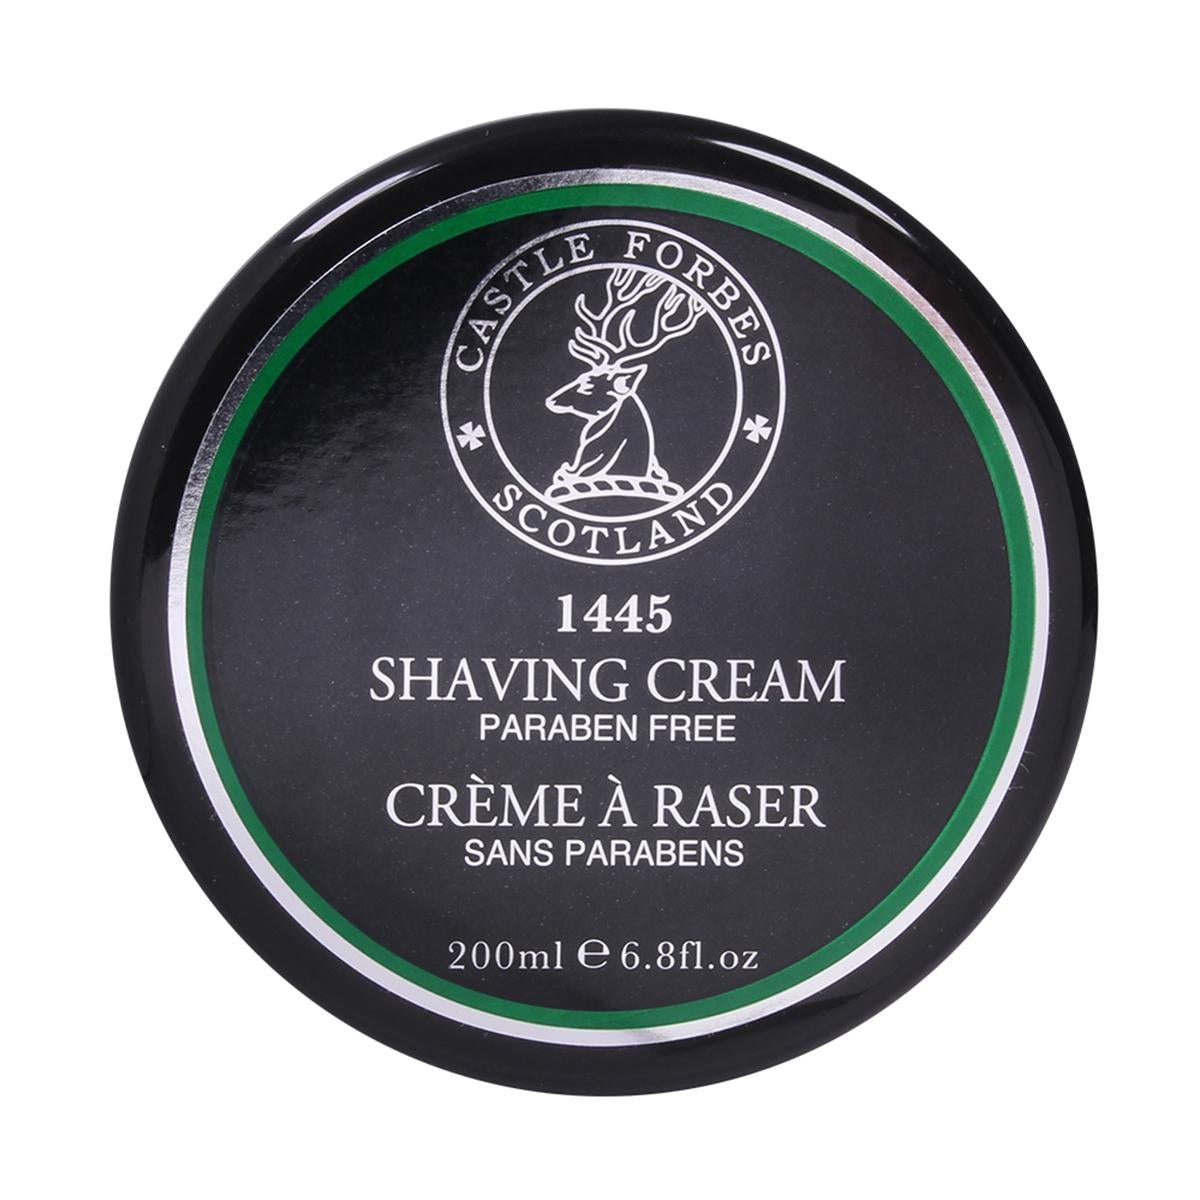 Primary image of 1445 Shaving Cream